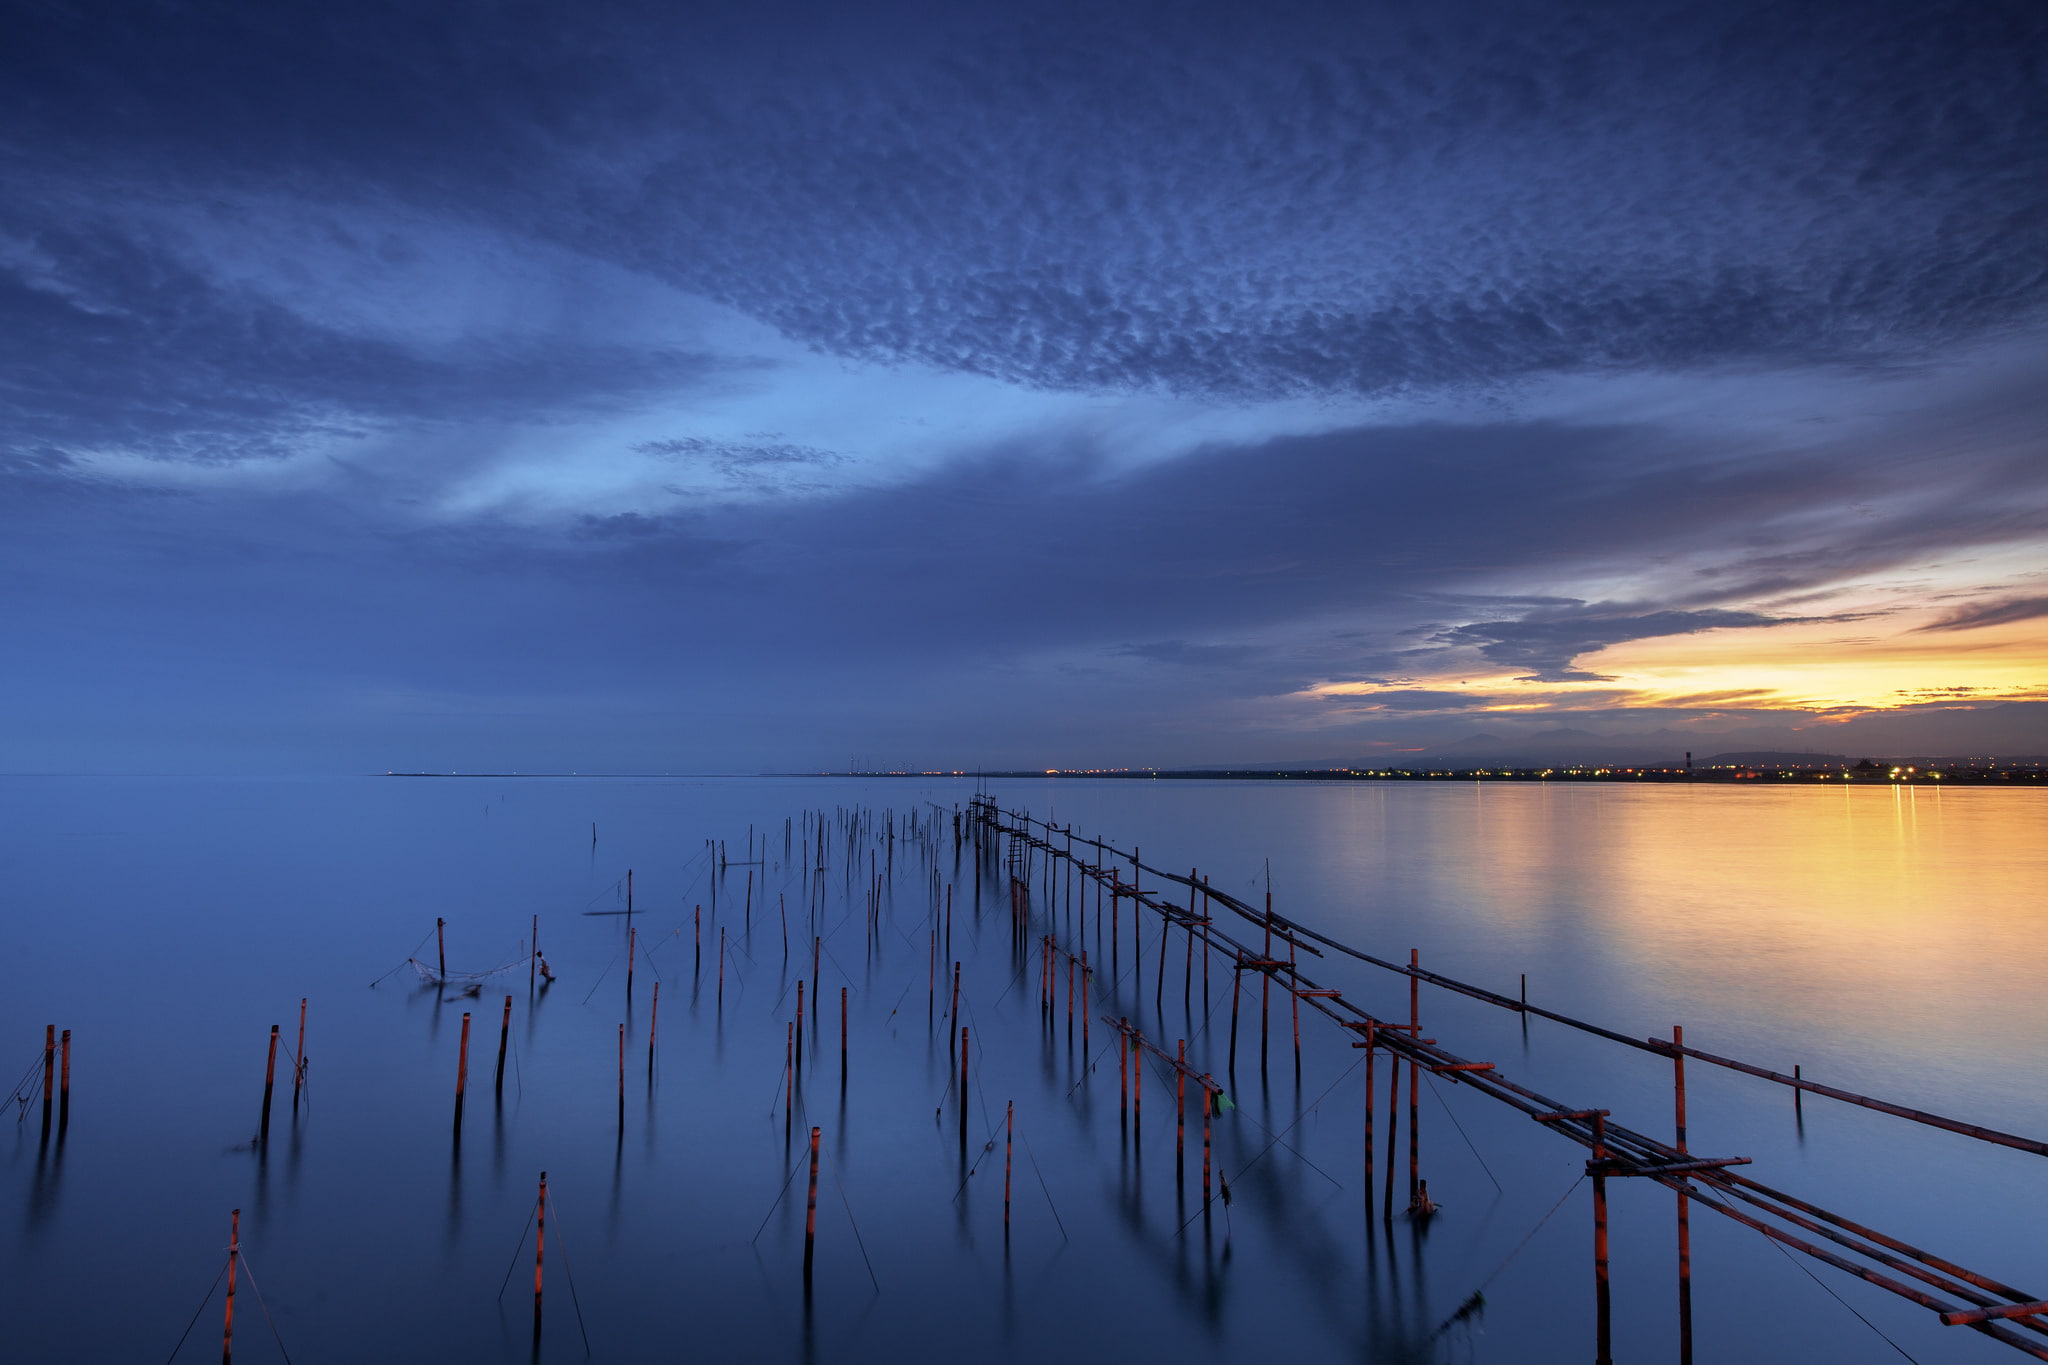 calm, ocean, reflection, sea, sky, sunset, taiwan, tranquility